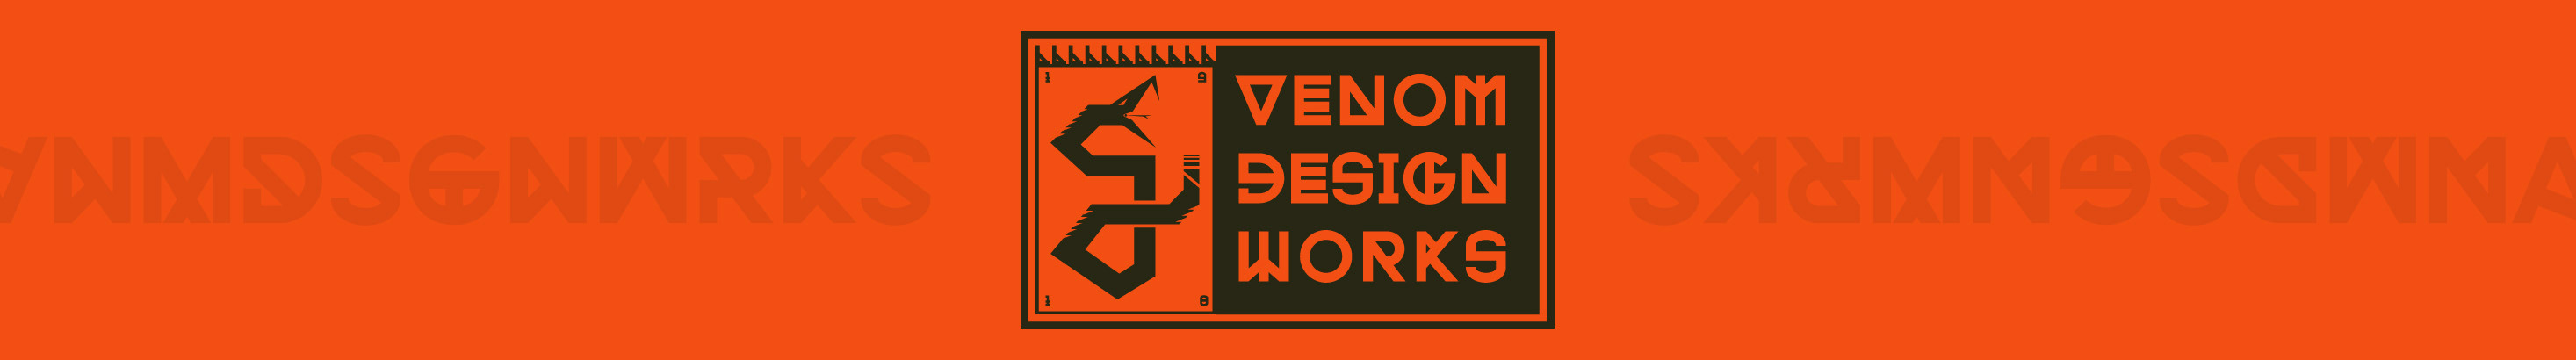 Venom Design Works -'s profile banner